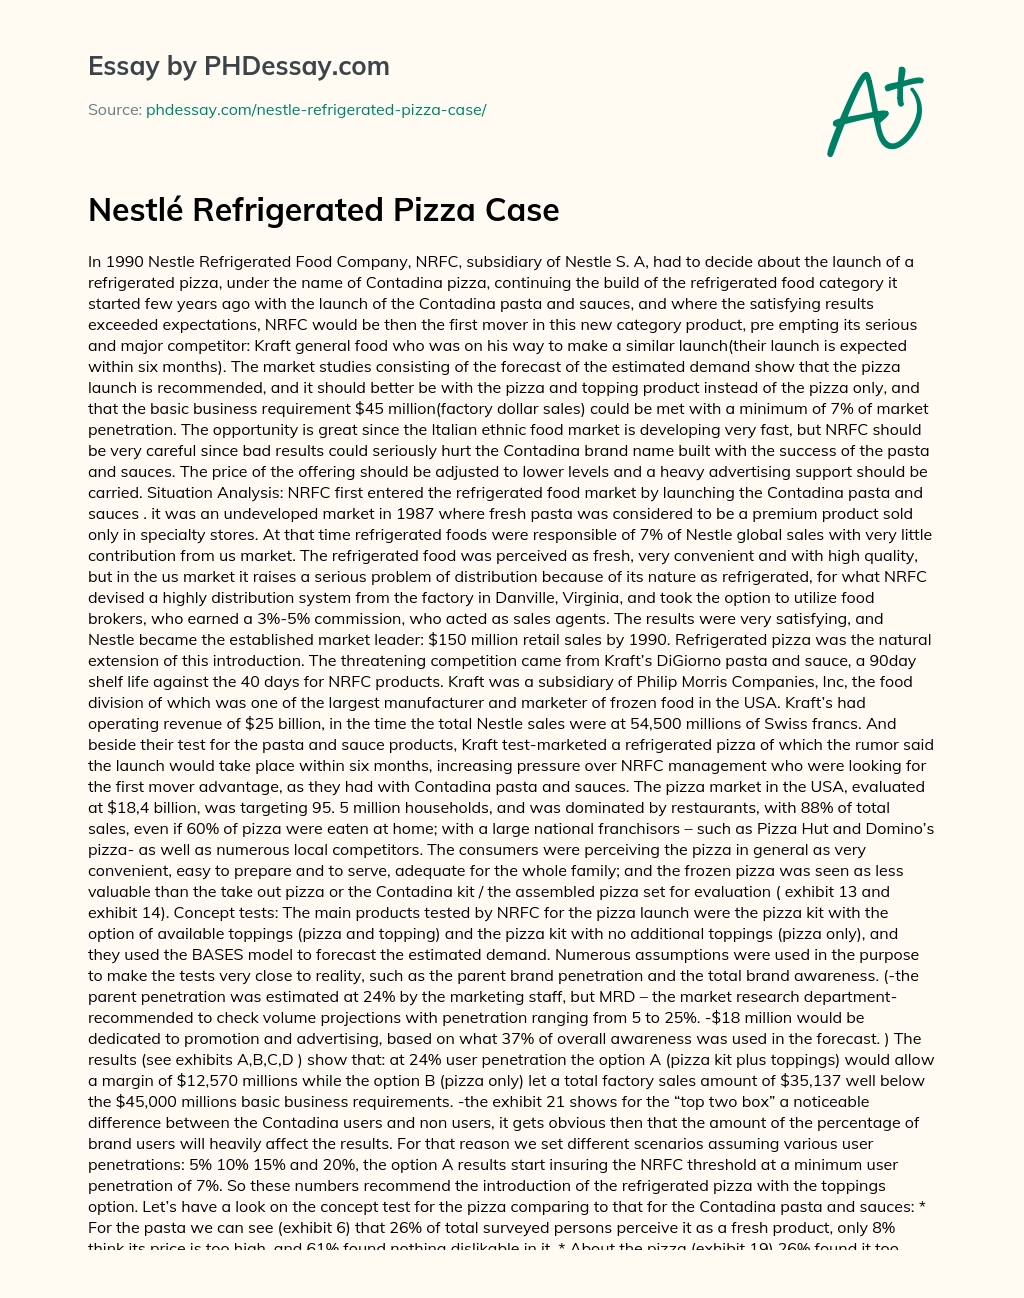 Nestlé Refrigerated Pizza Case essay